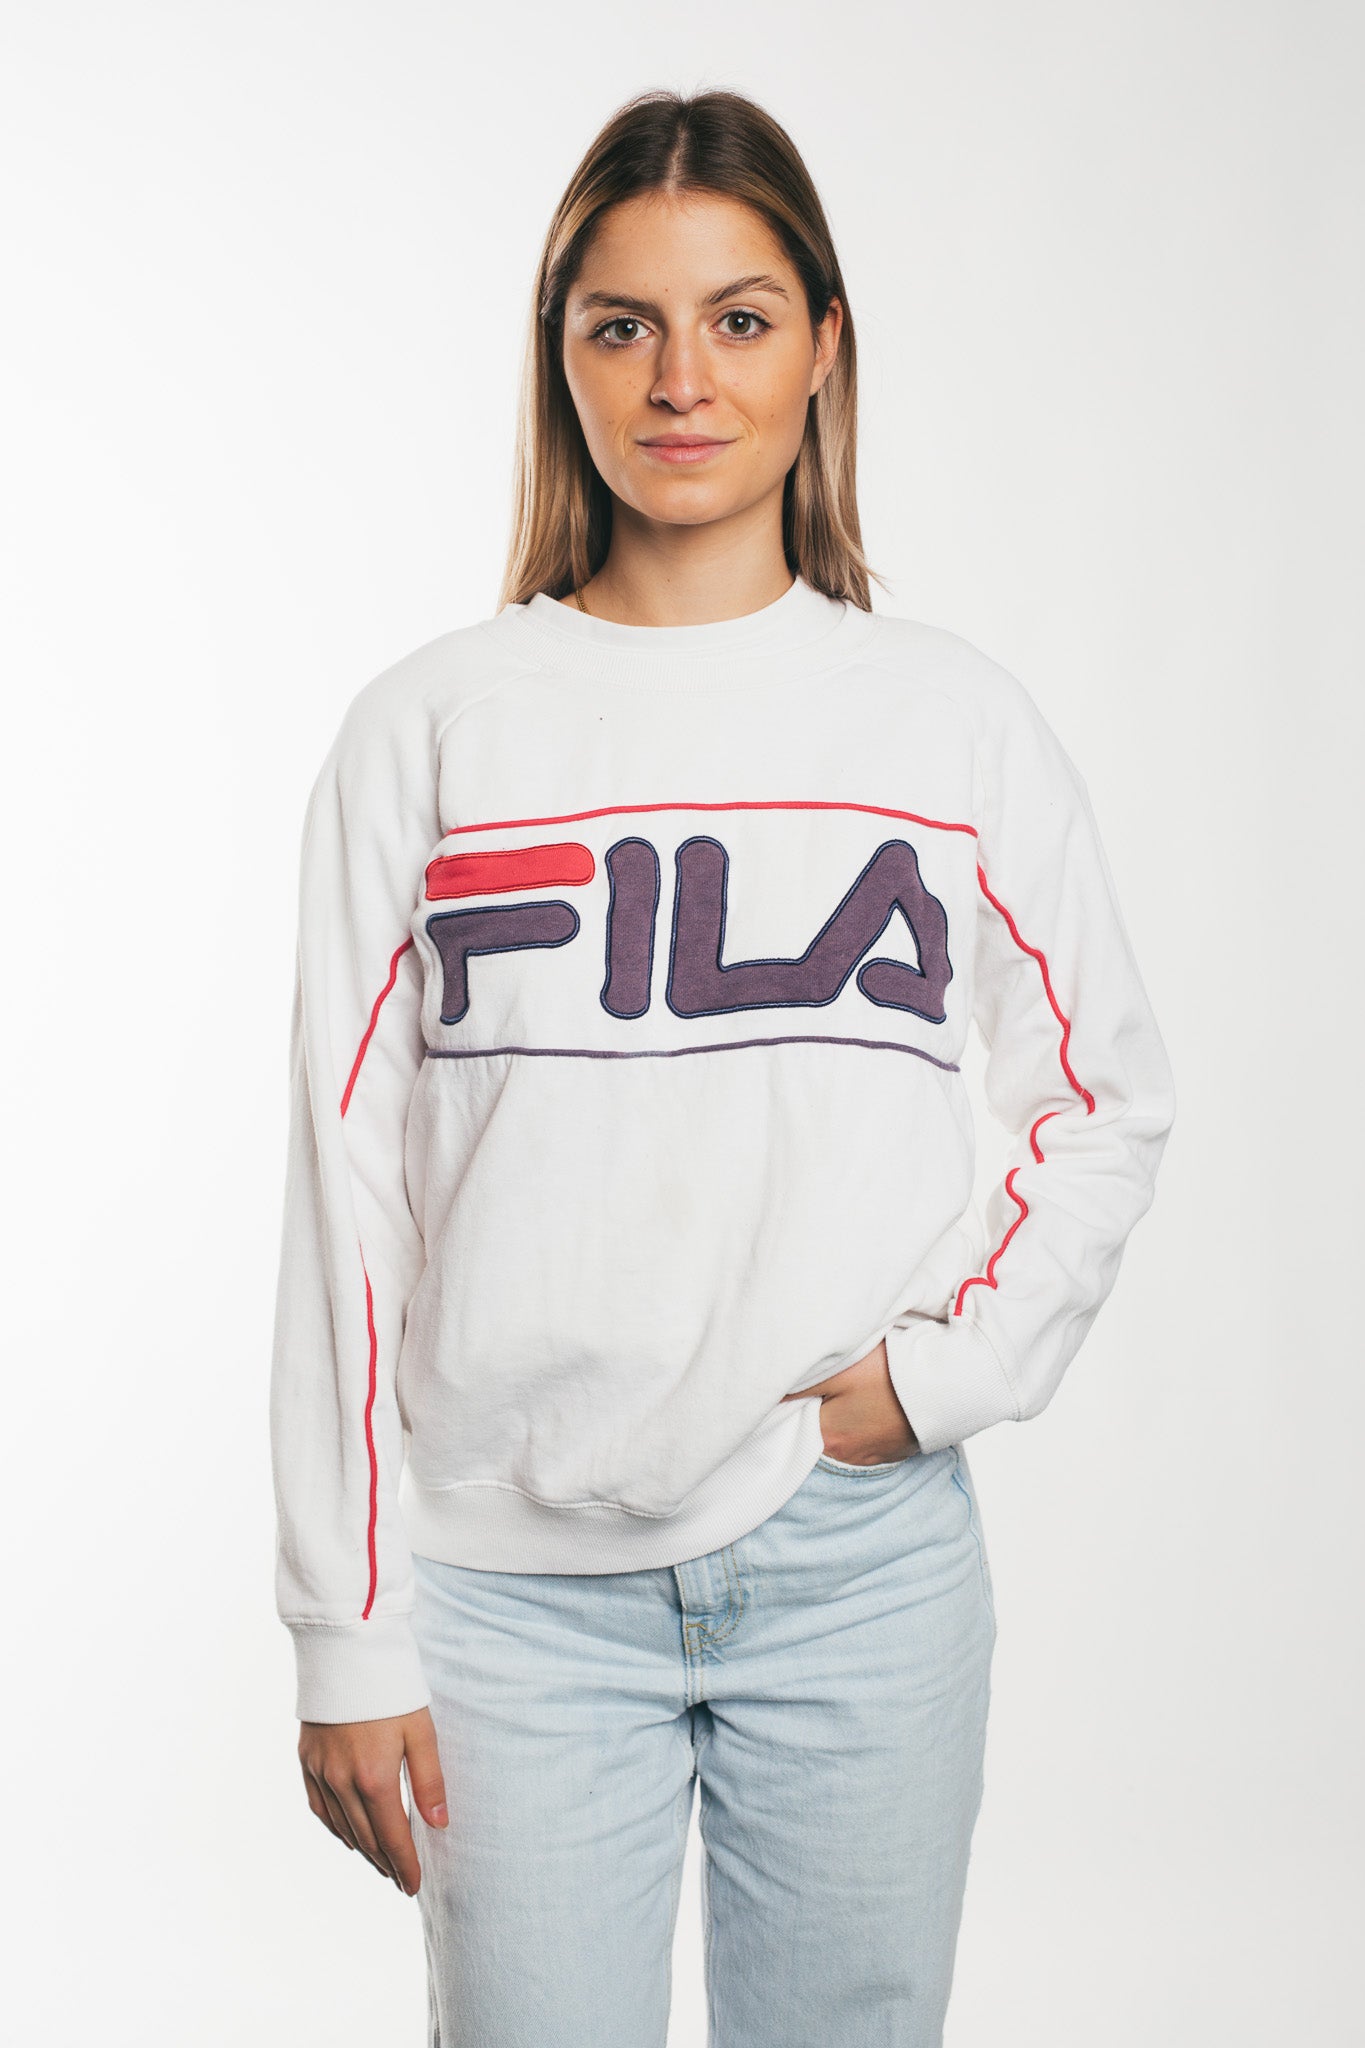 Fila  - Sweatshirt